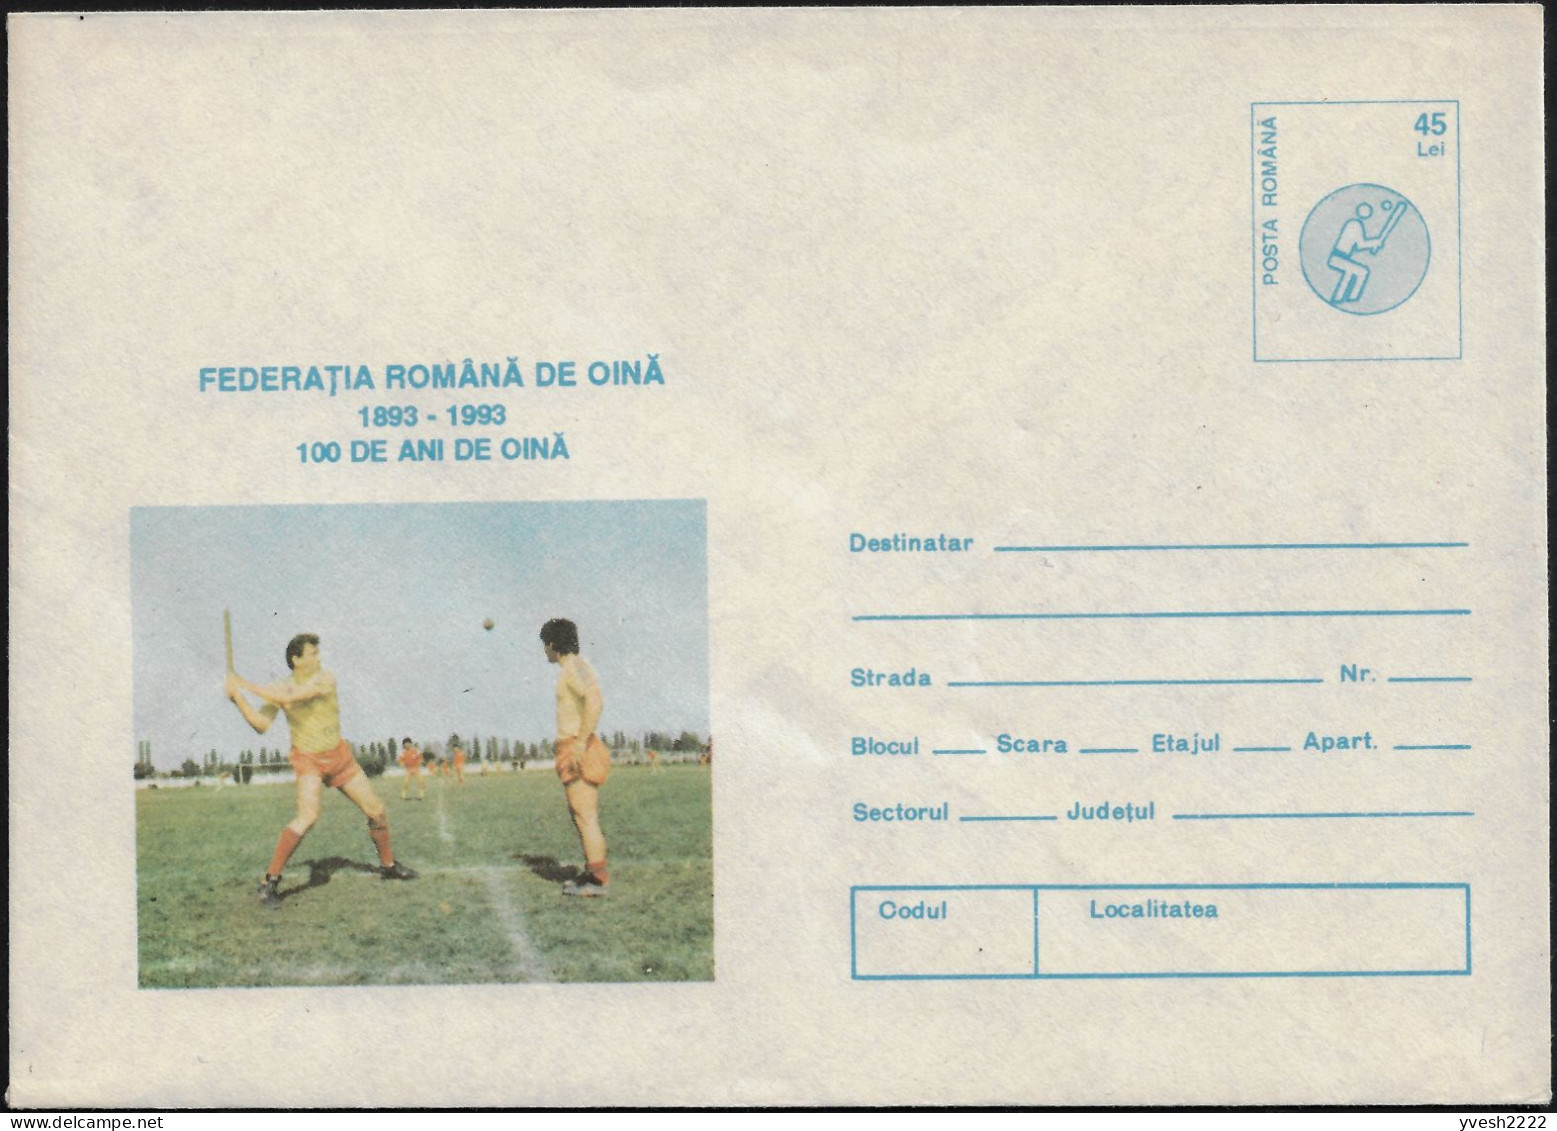 Roumanie 1993  Entier Postal Fédération Roumaine De Oină (histoire Du Base-ball) - Béisbol